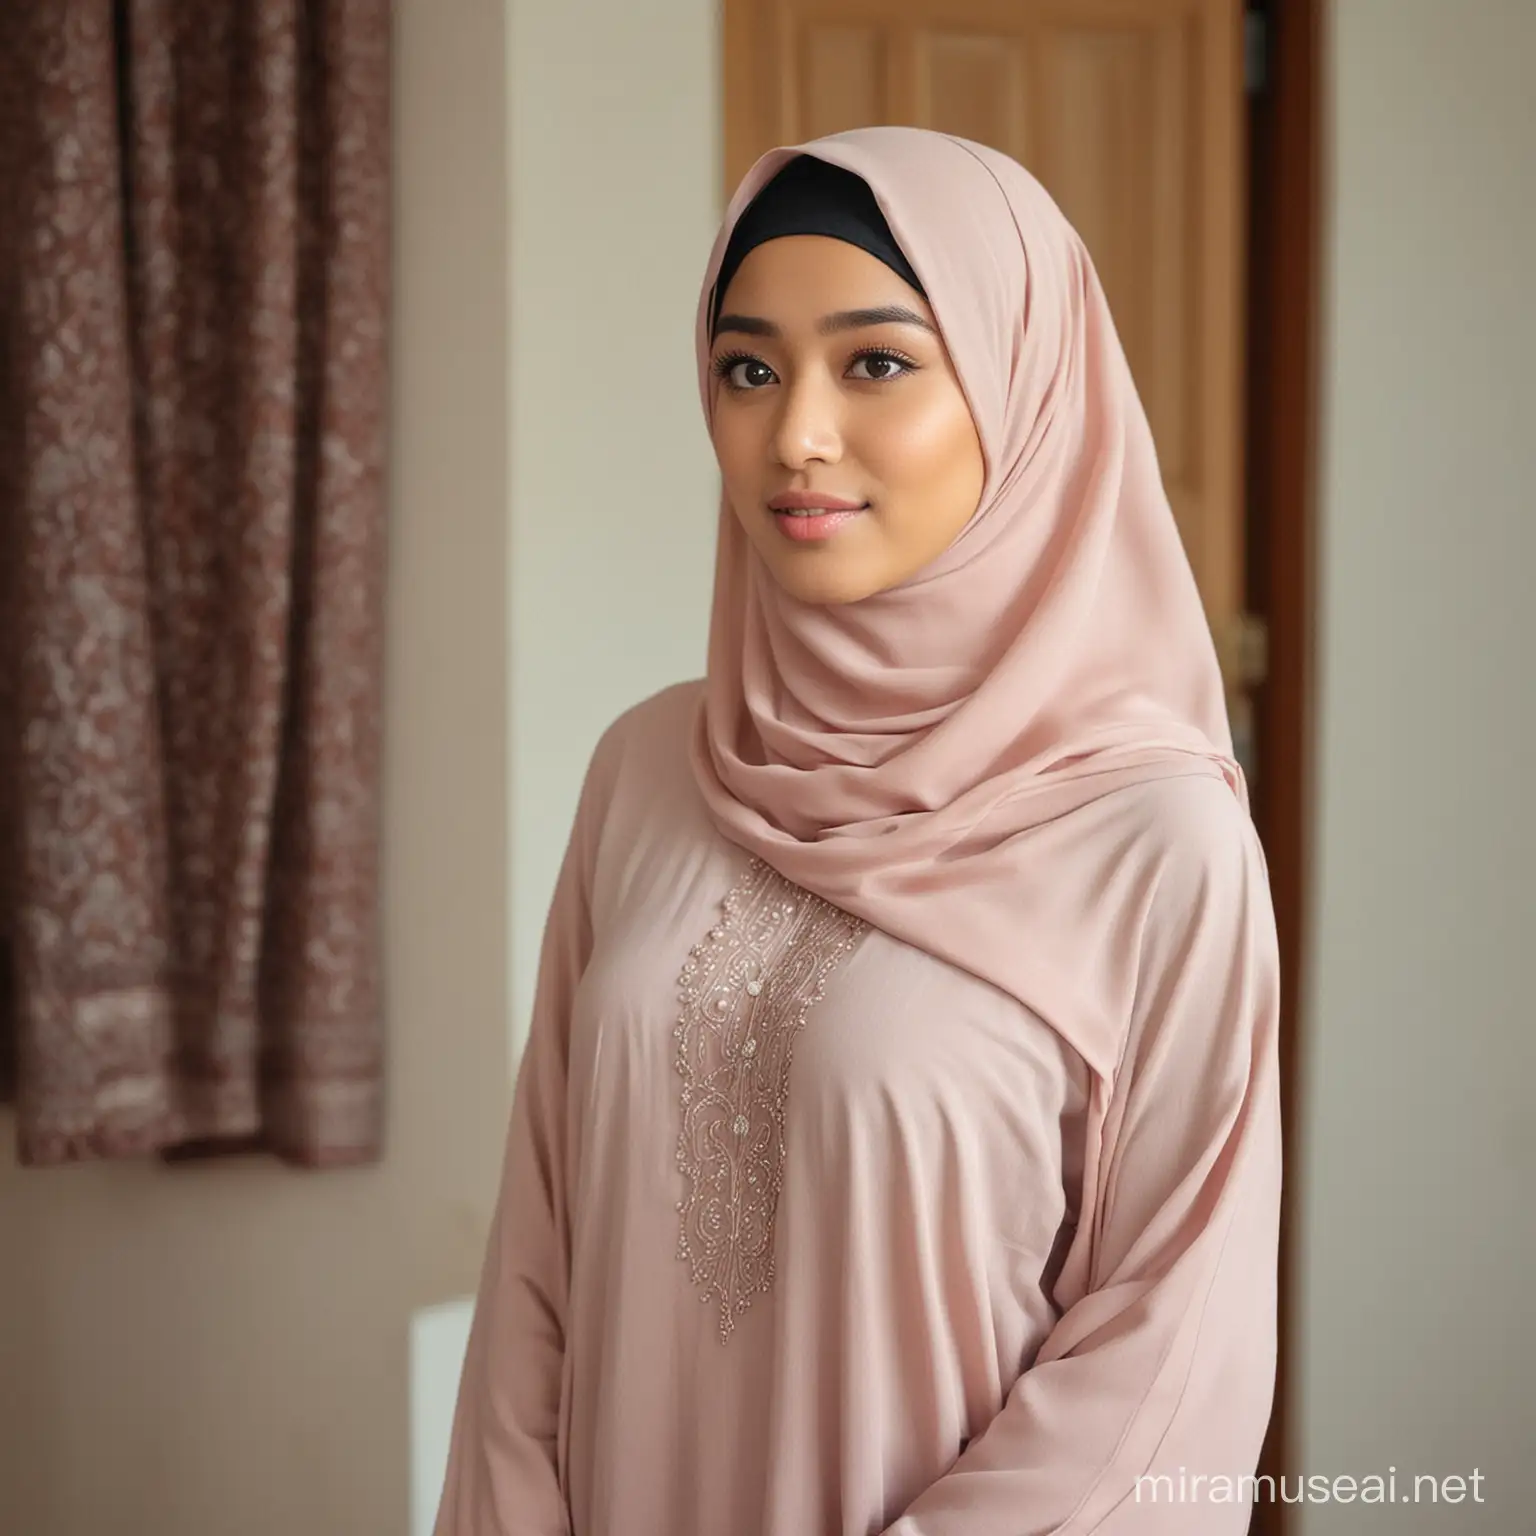 Indonesian Woman in Traditional Syari Hijab Walking Indoors